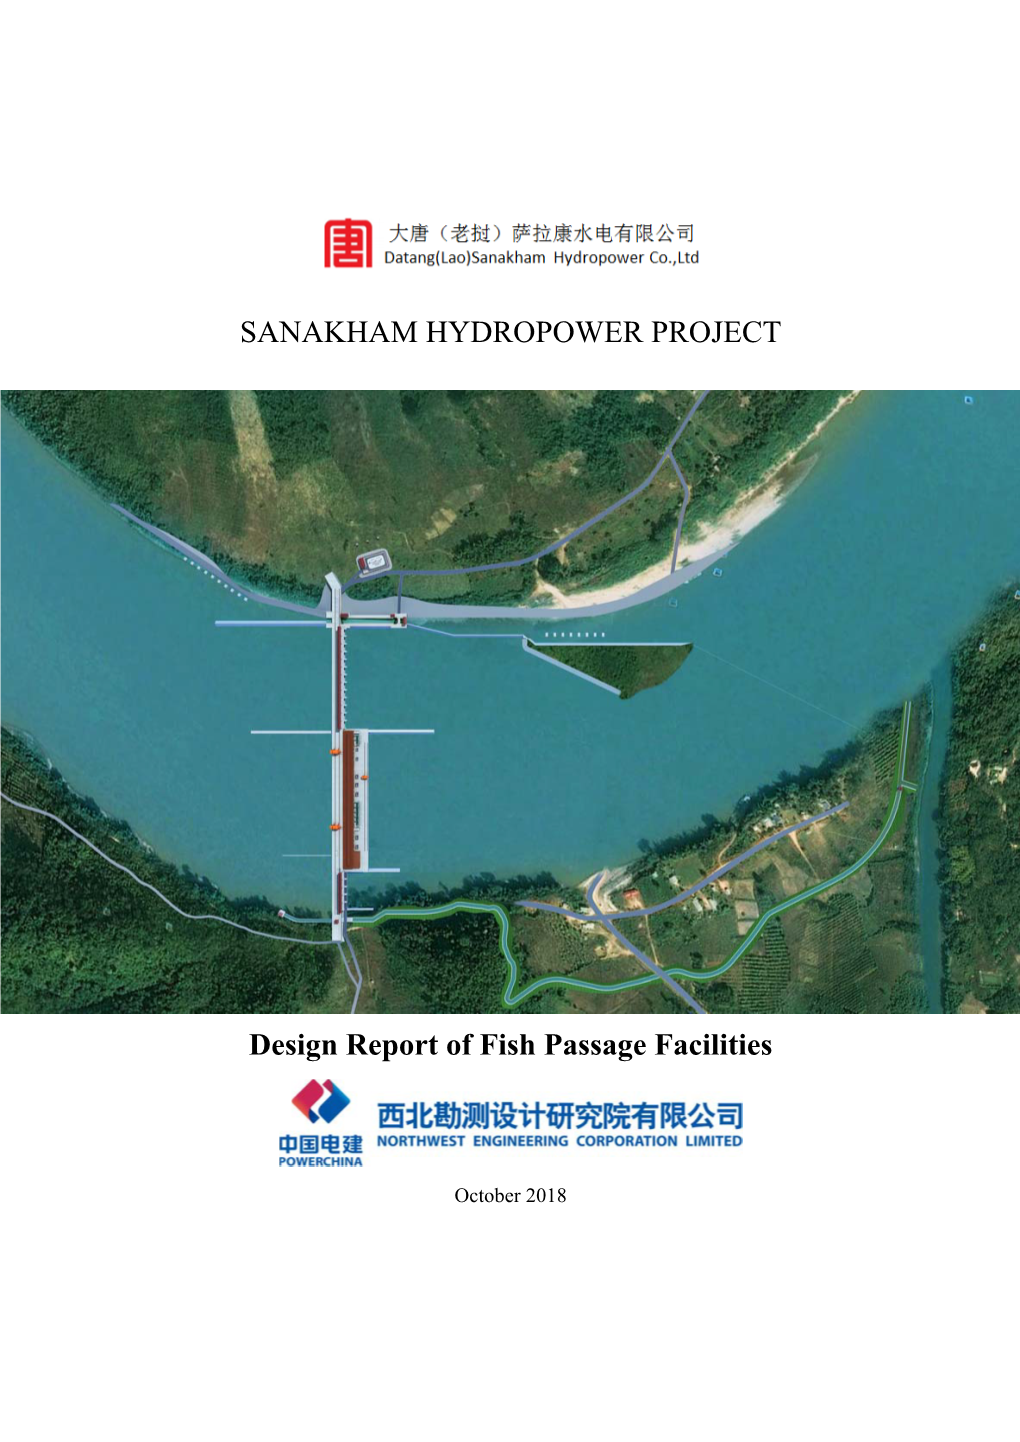 Design Report of Fish Passage Facilities